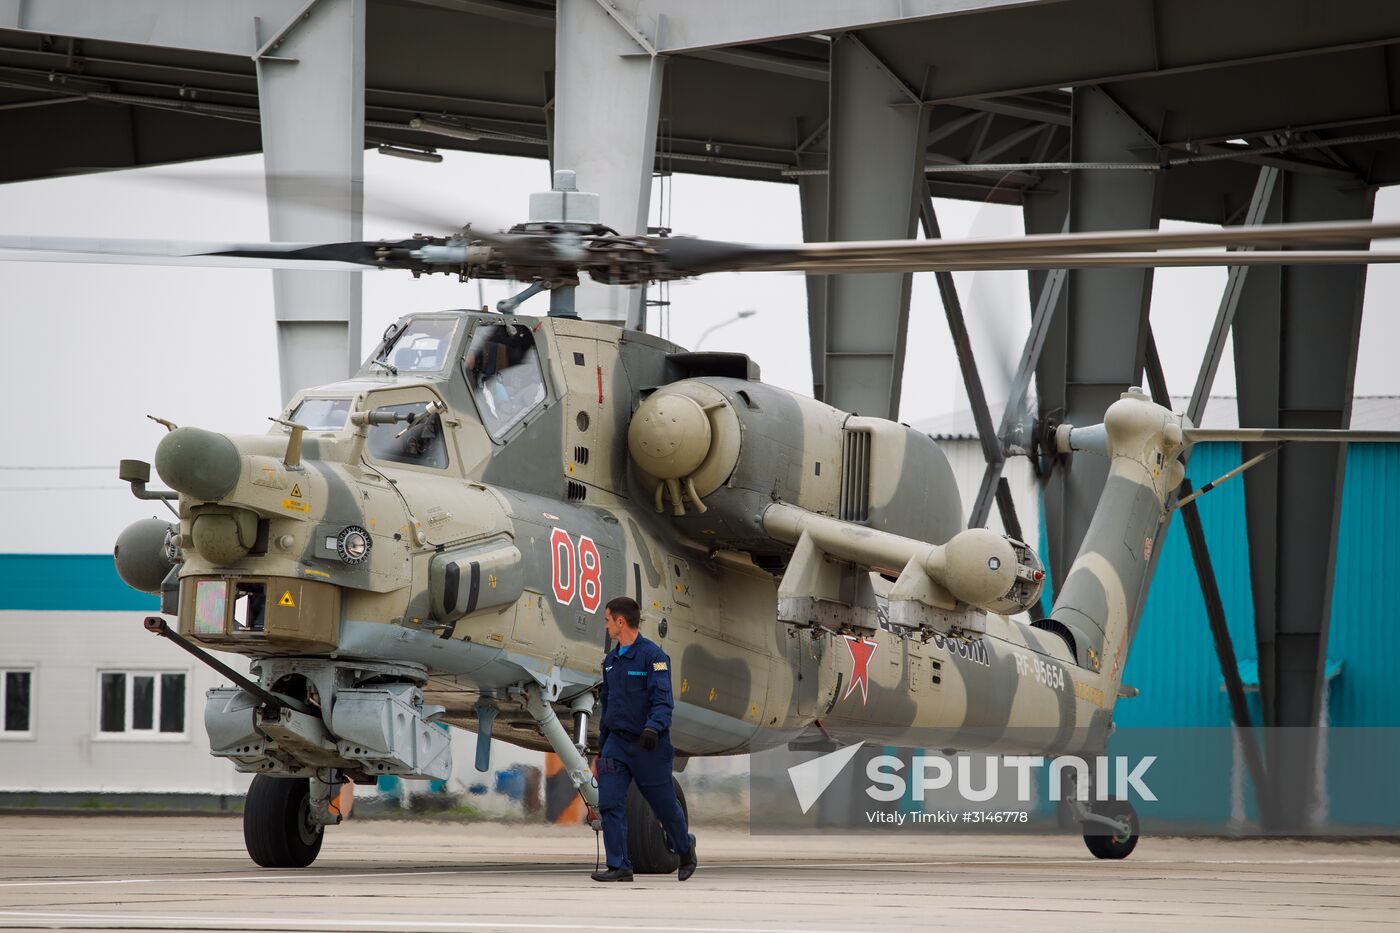 Mi-35M helicopters on training flights in Krasnodar Territory